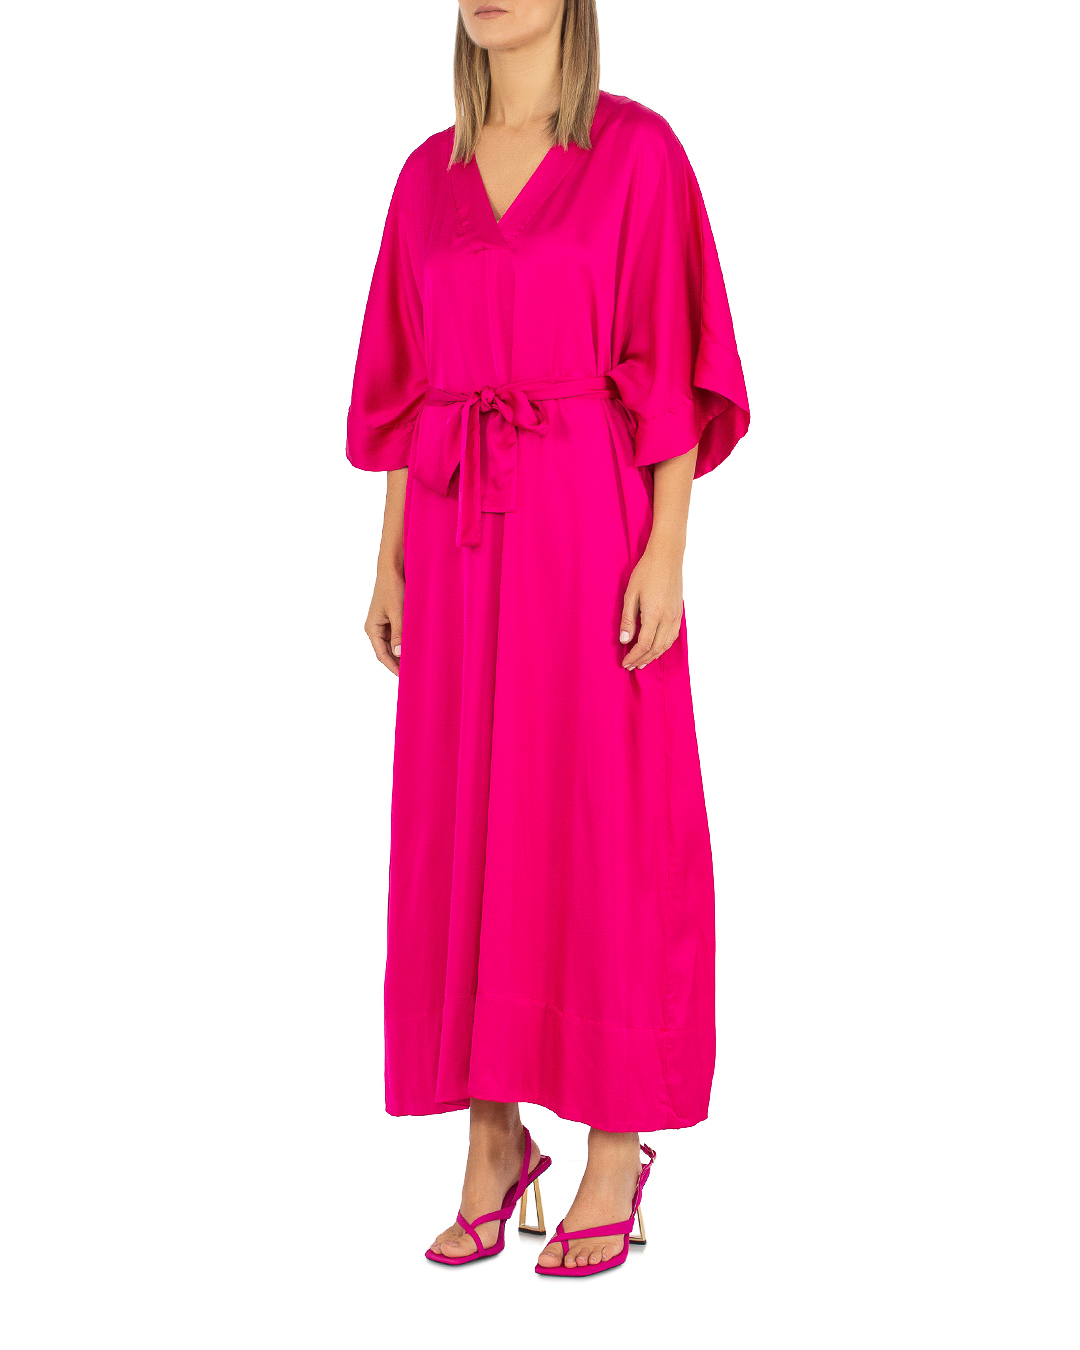 платье+пояс ICONA BY KAOS PP5TZ030 розовый 40, размер 40 - фото 3